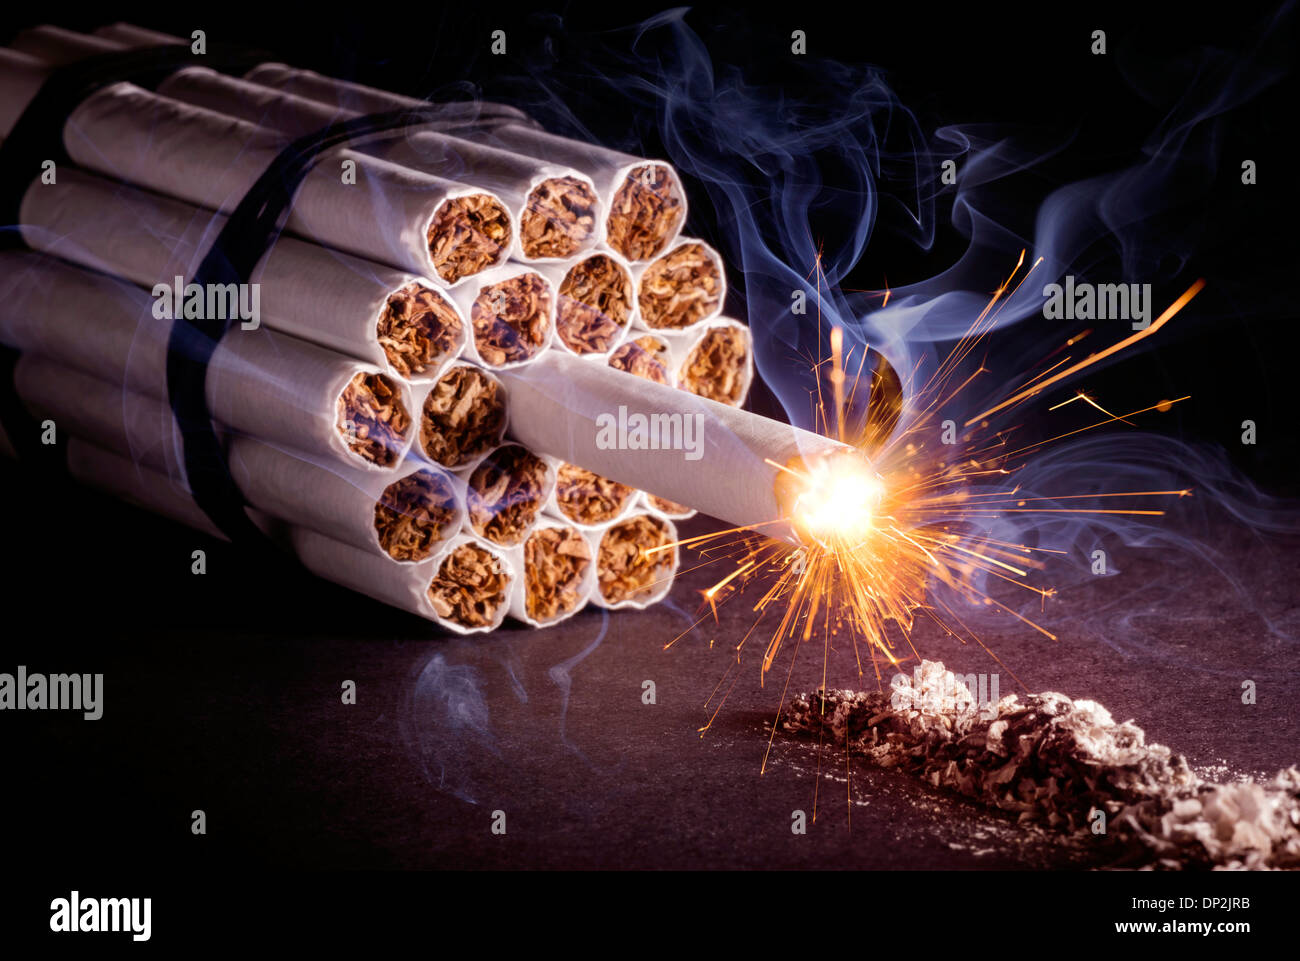 Dangers of smoking, conceptual image Stock Photo